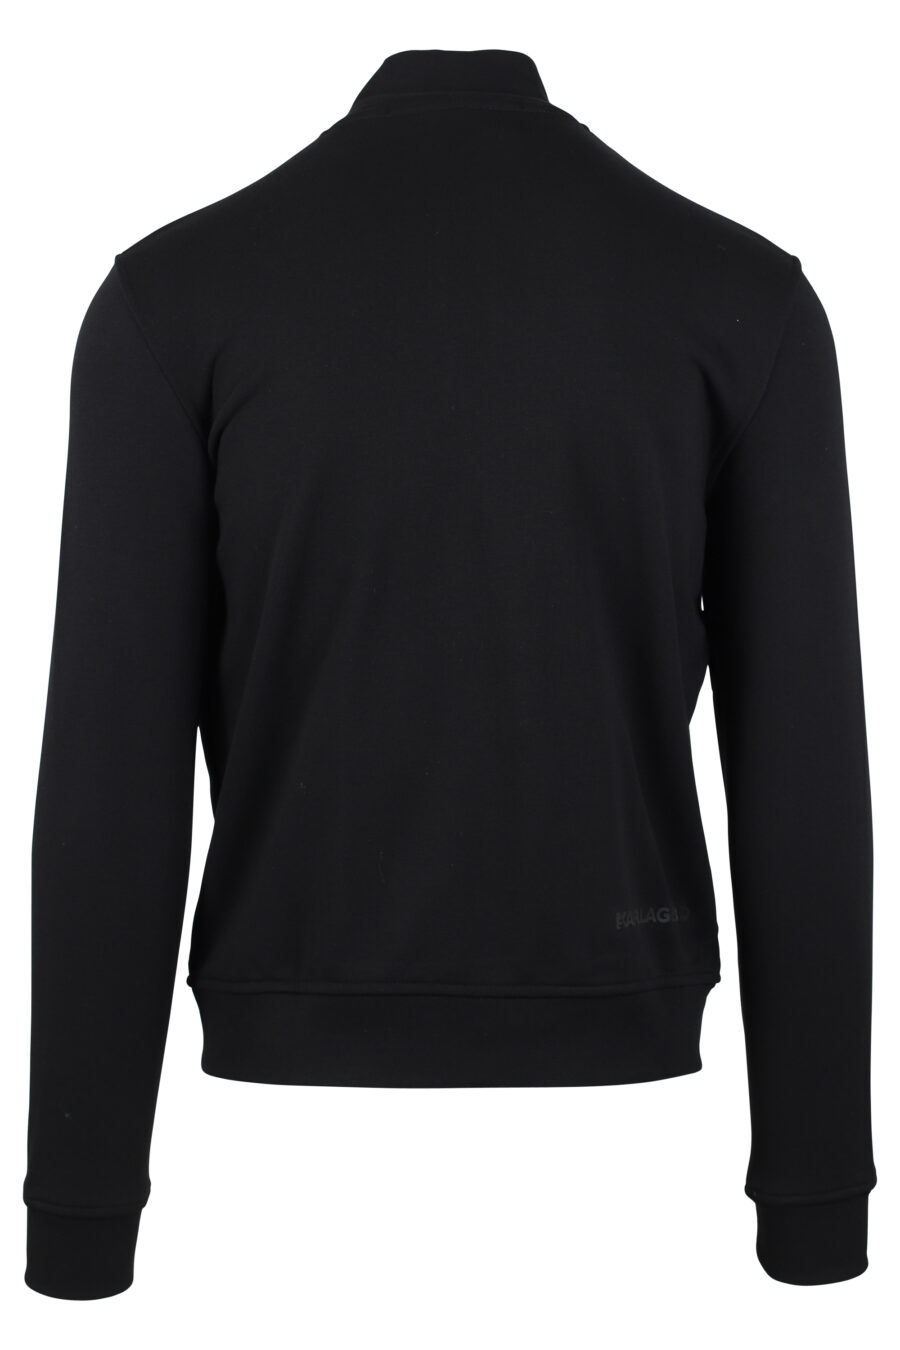 Black sweatshirt with zip and "karl" logo in white silhouette - IMG 4629